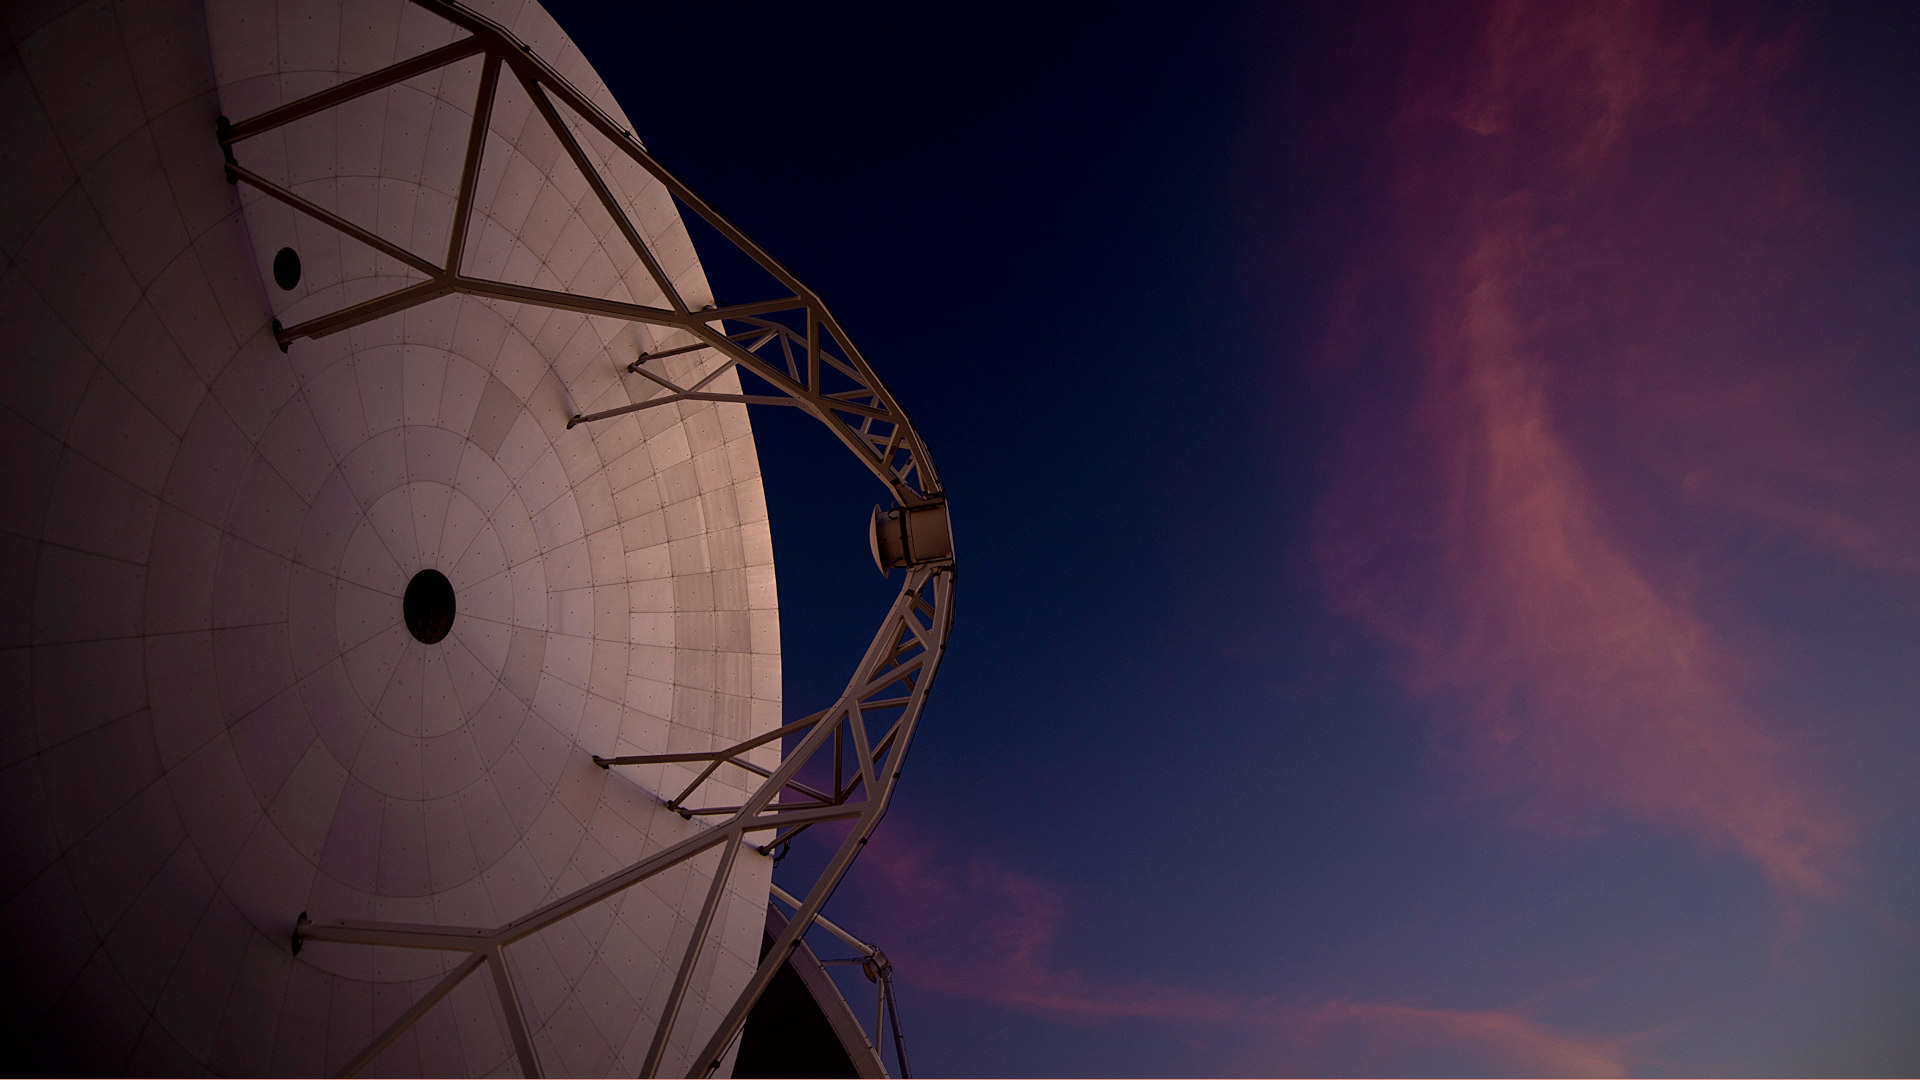 Radio telescope antennas of the Atacama Large Millimeter/submillimeter Array project on the Chajnantor plateau, Atacama desert, Chile.